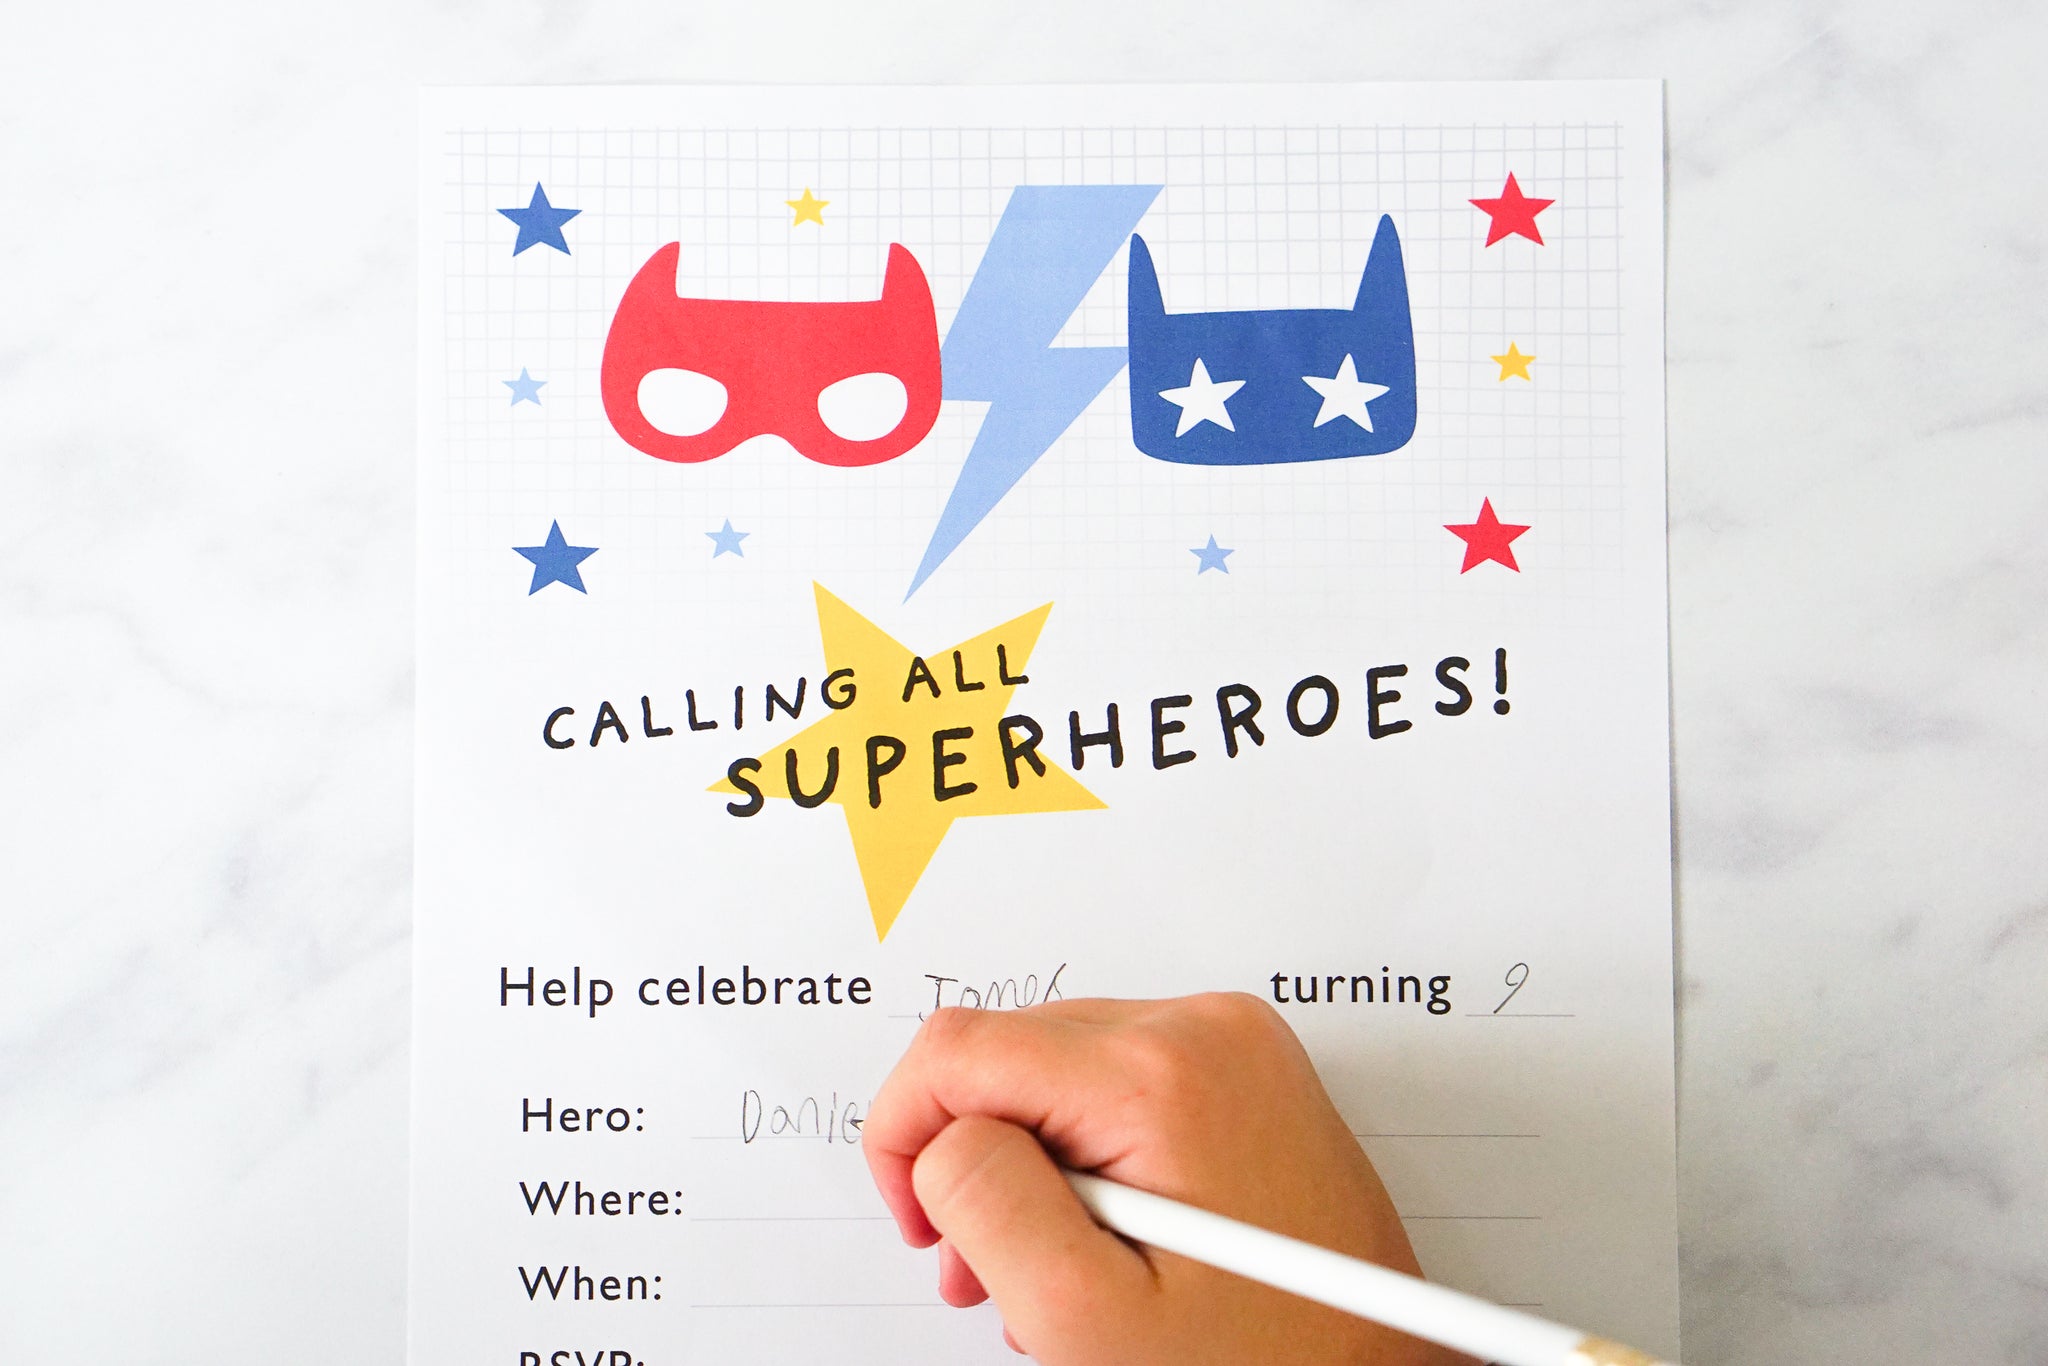 Superhero party ideas